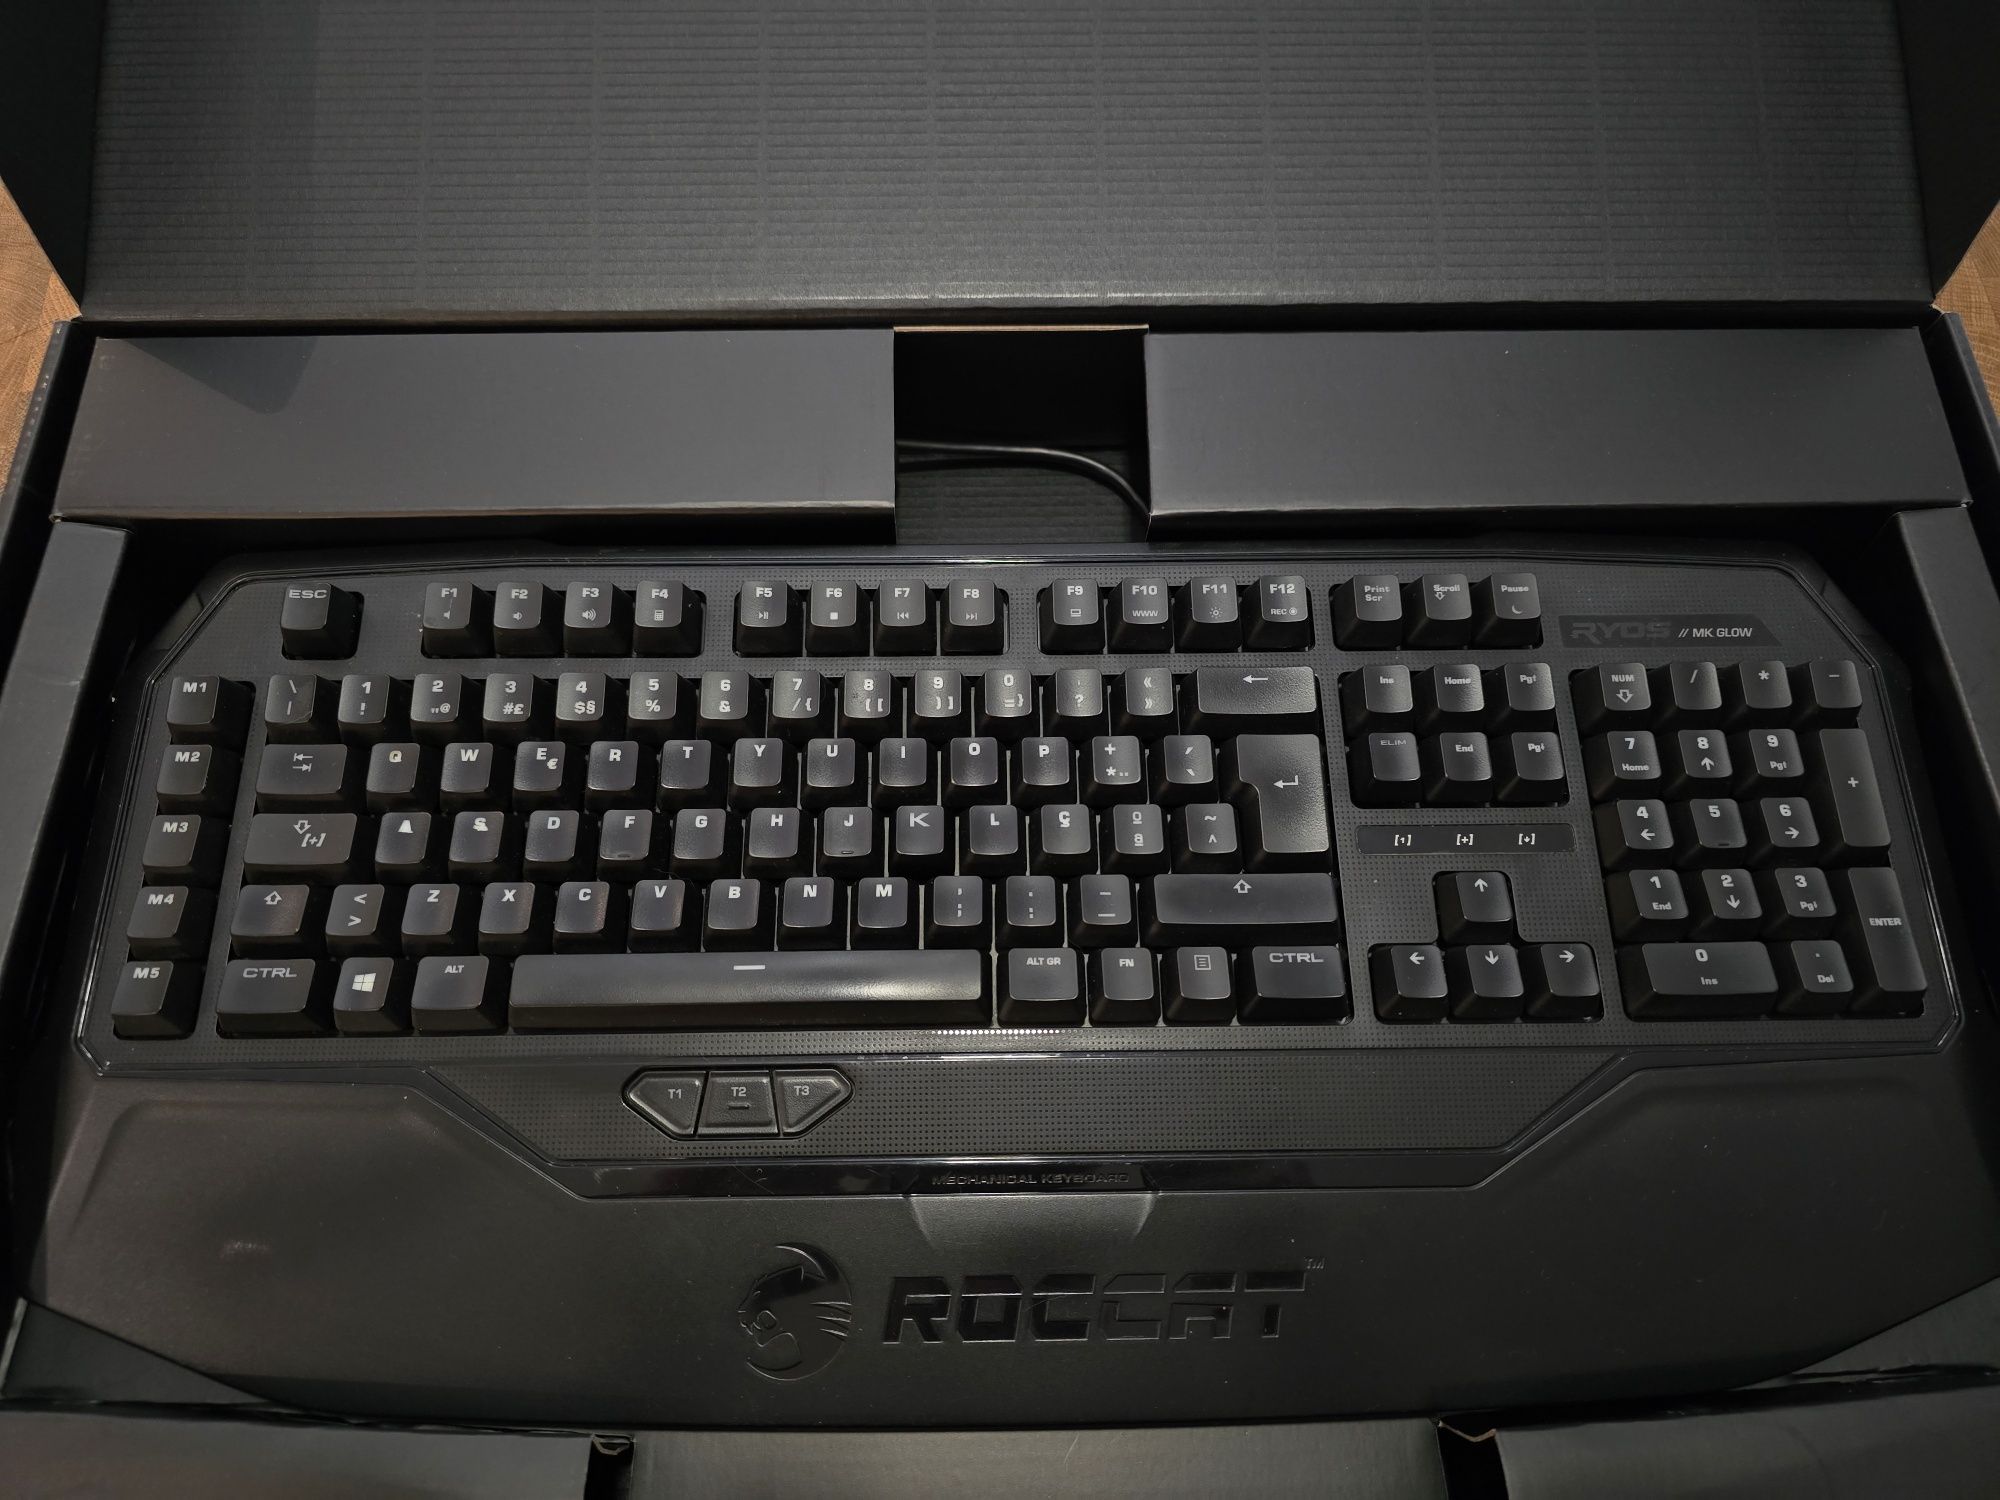 2 teclados mecânicos Corsair K70 e Roccat Ryos (ler anúncio)